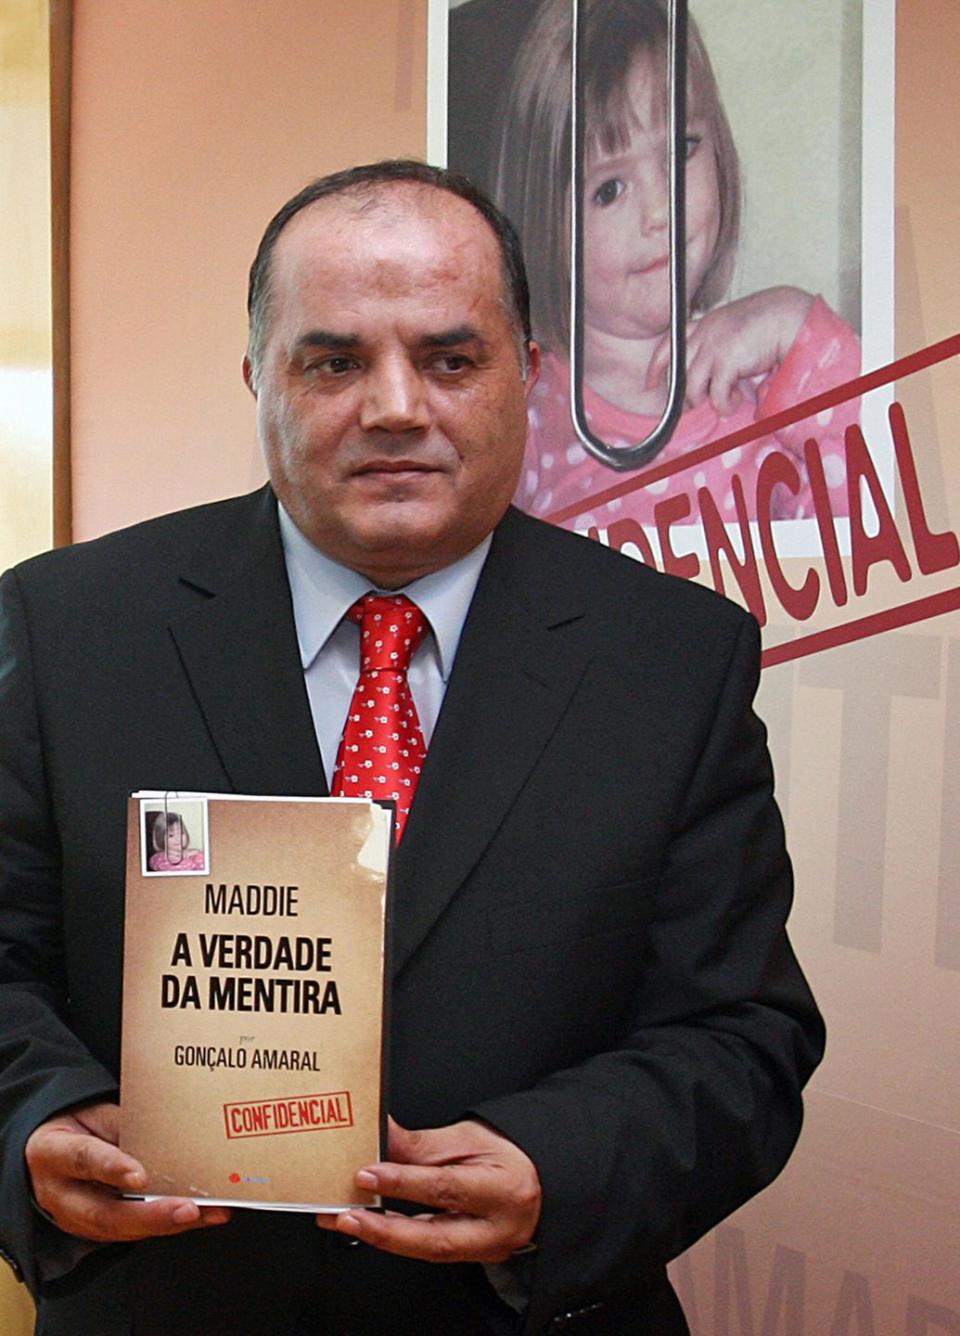 Goncalo Amaral, Former Policia Judiciaria (Crime Police)